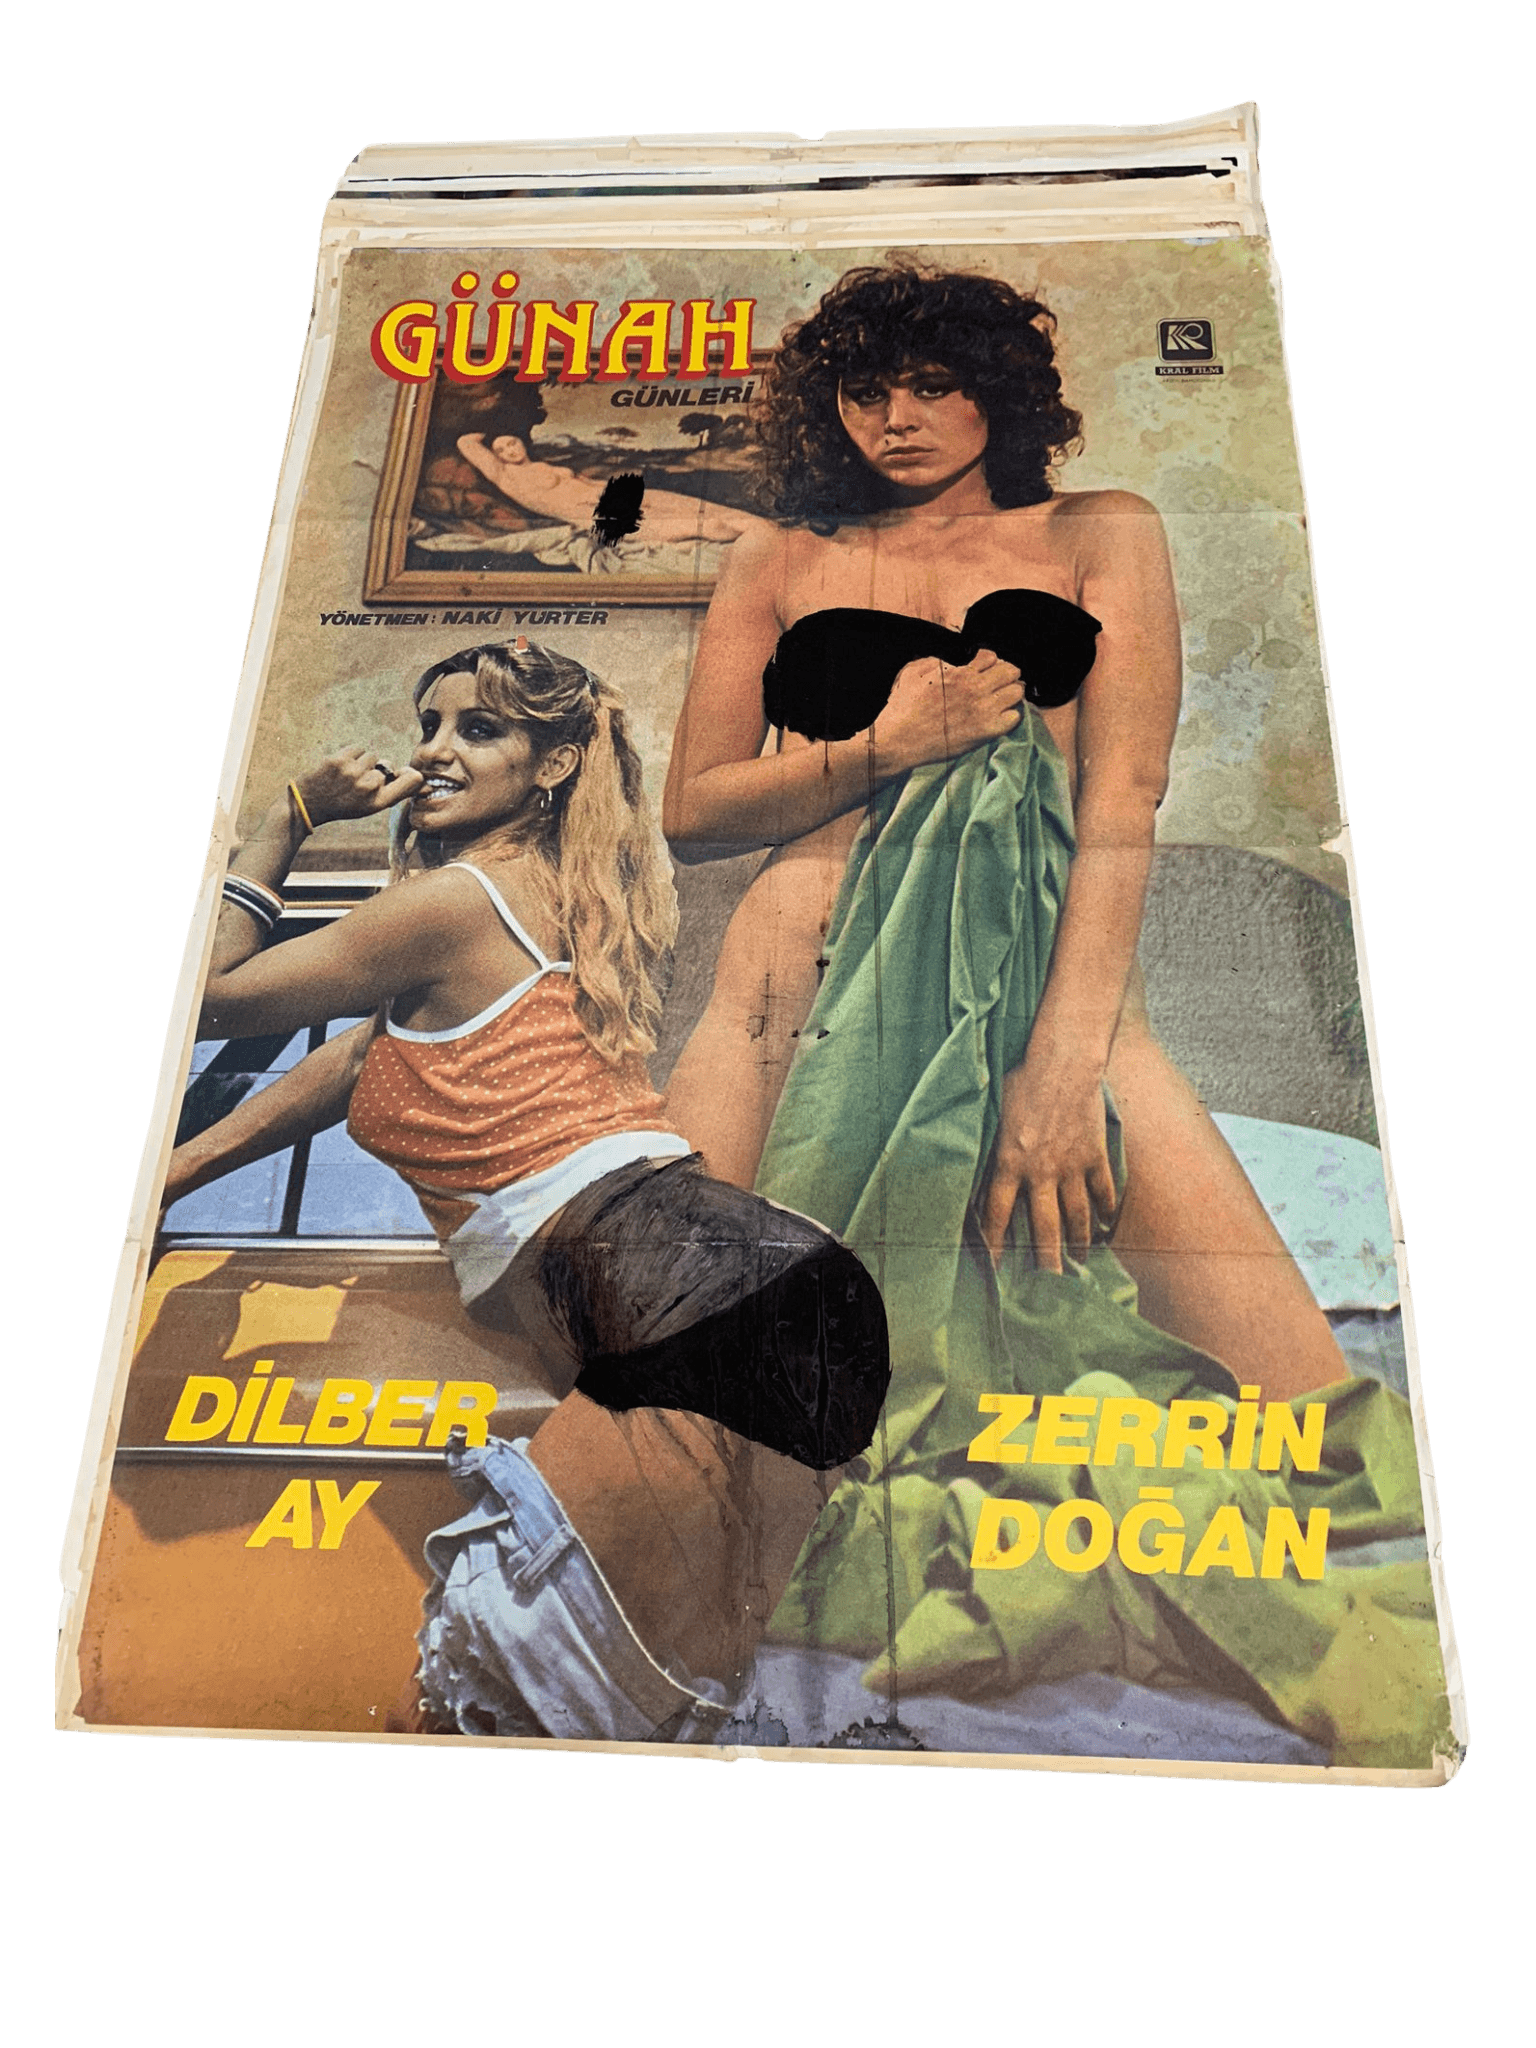 1970s-80s Turkish Erotic Film Posters | 200 Posters - KHAJISTAN™